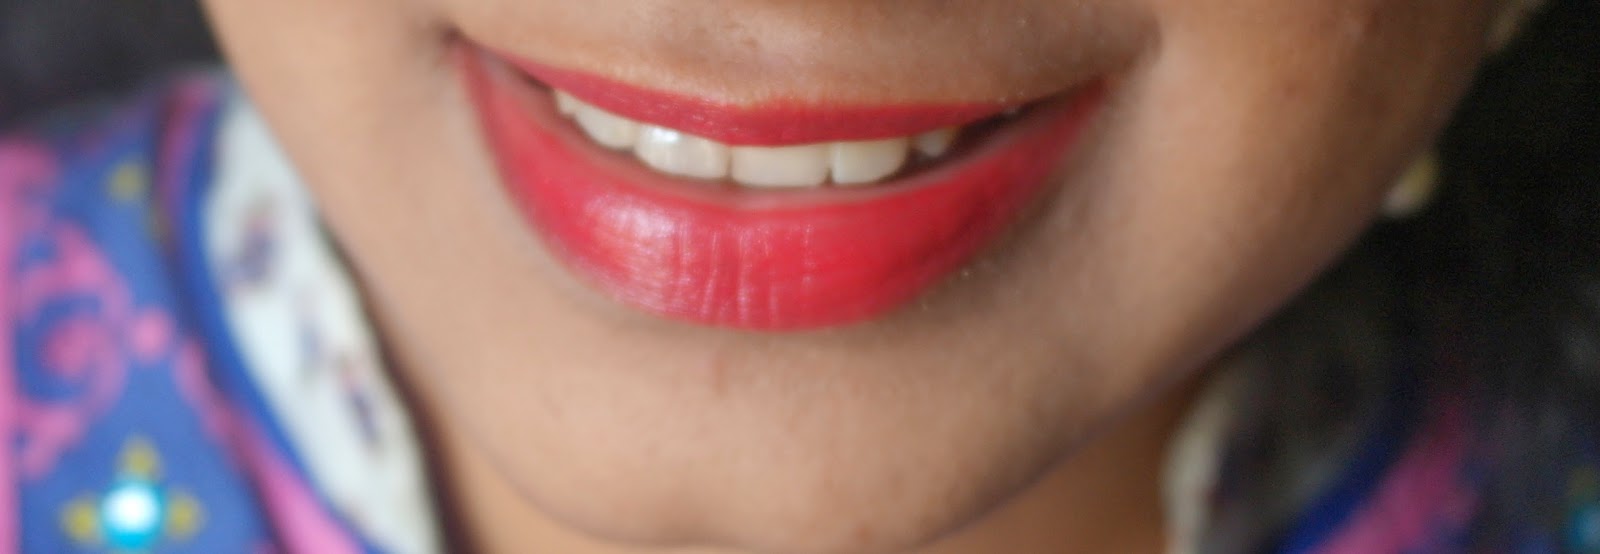 Revlon super lustrous lipstick pigmentation-staying power